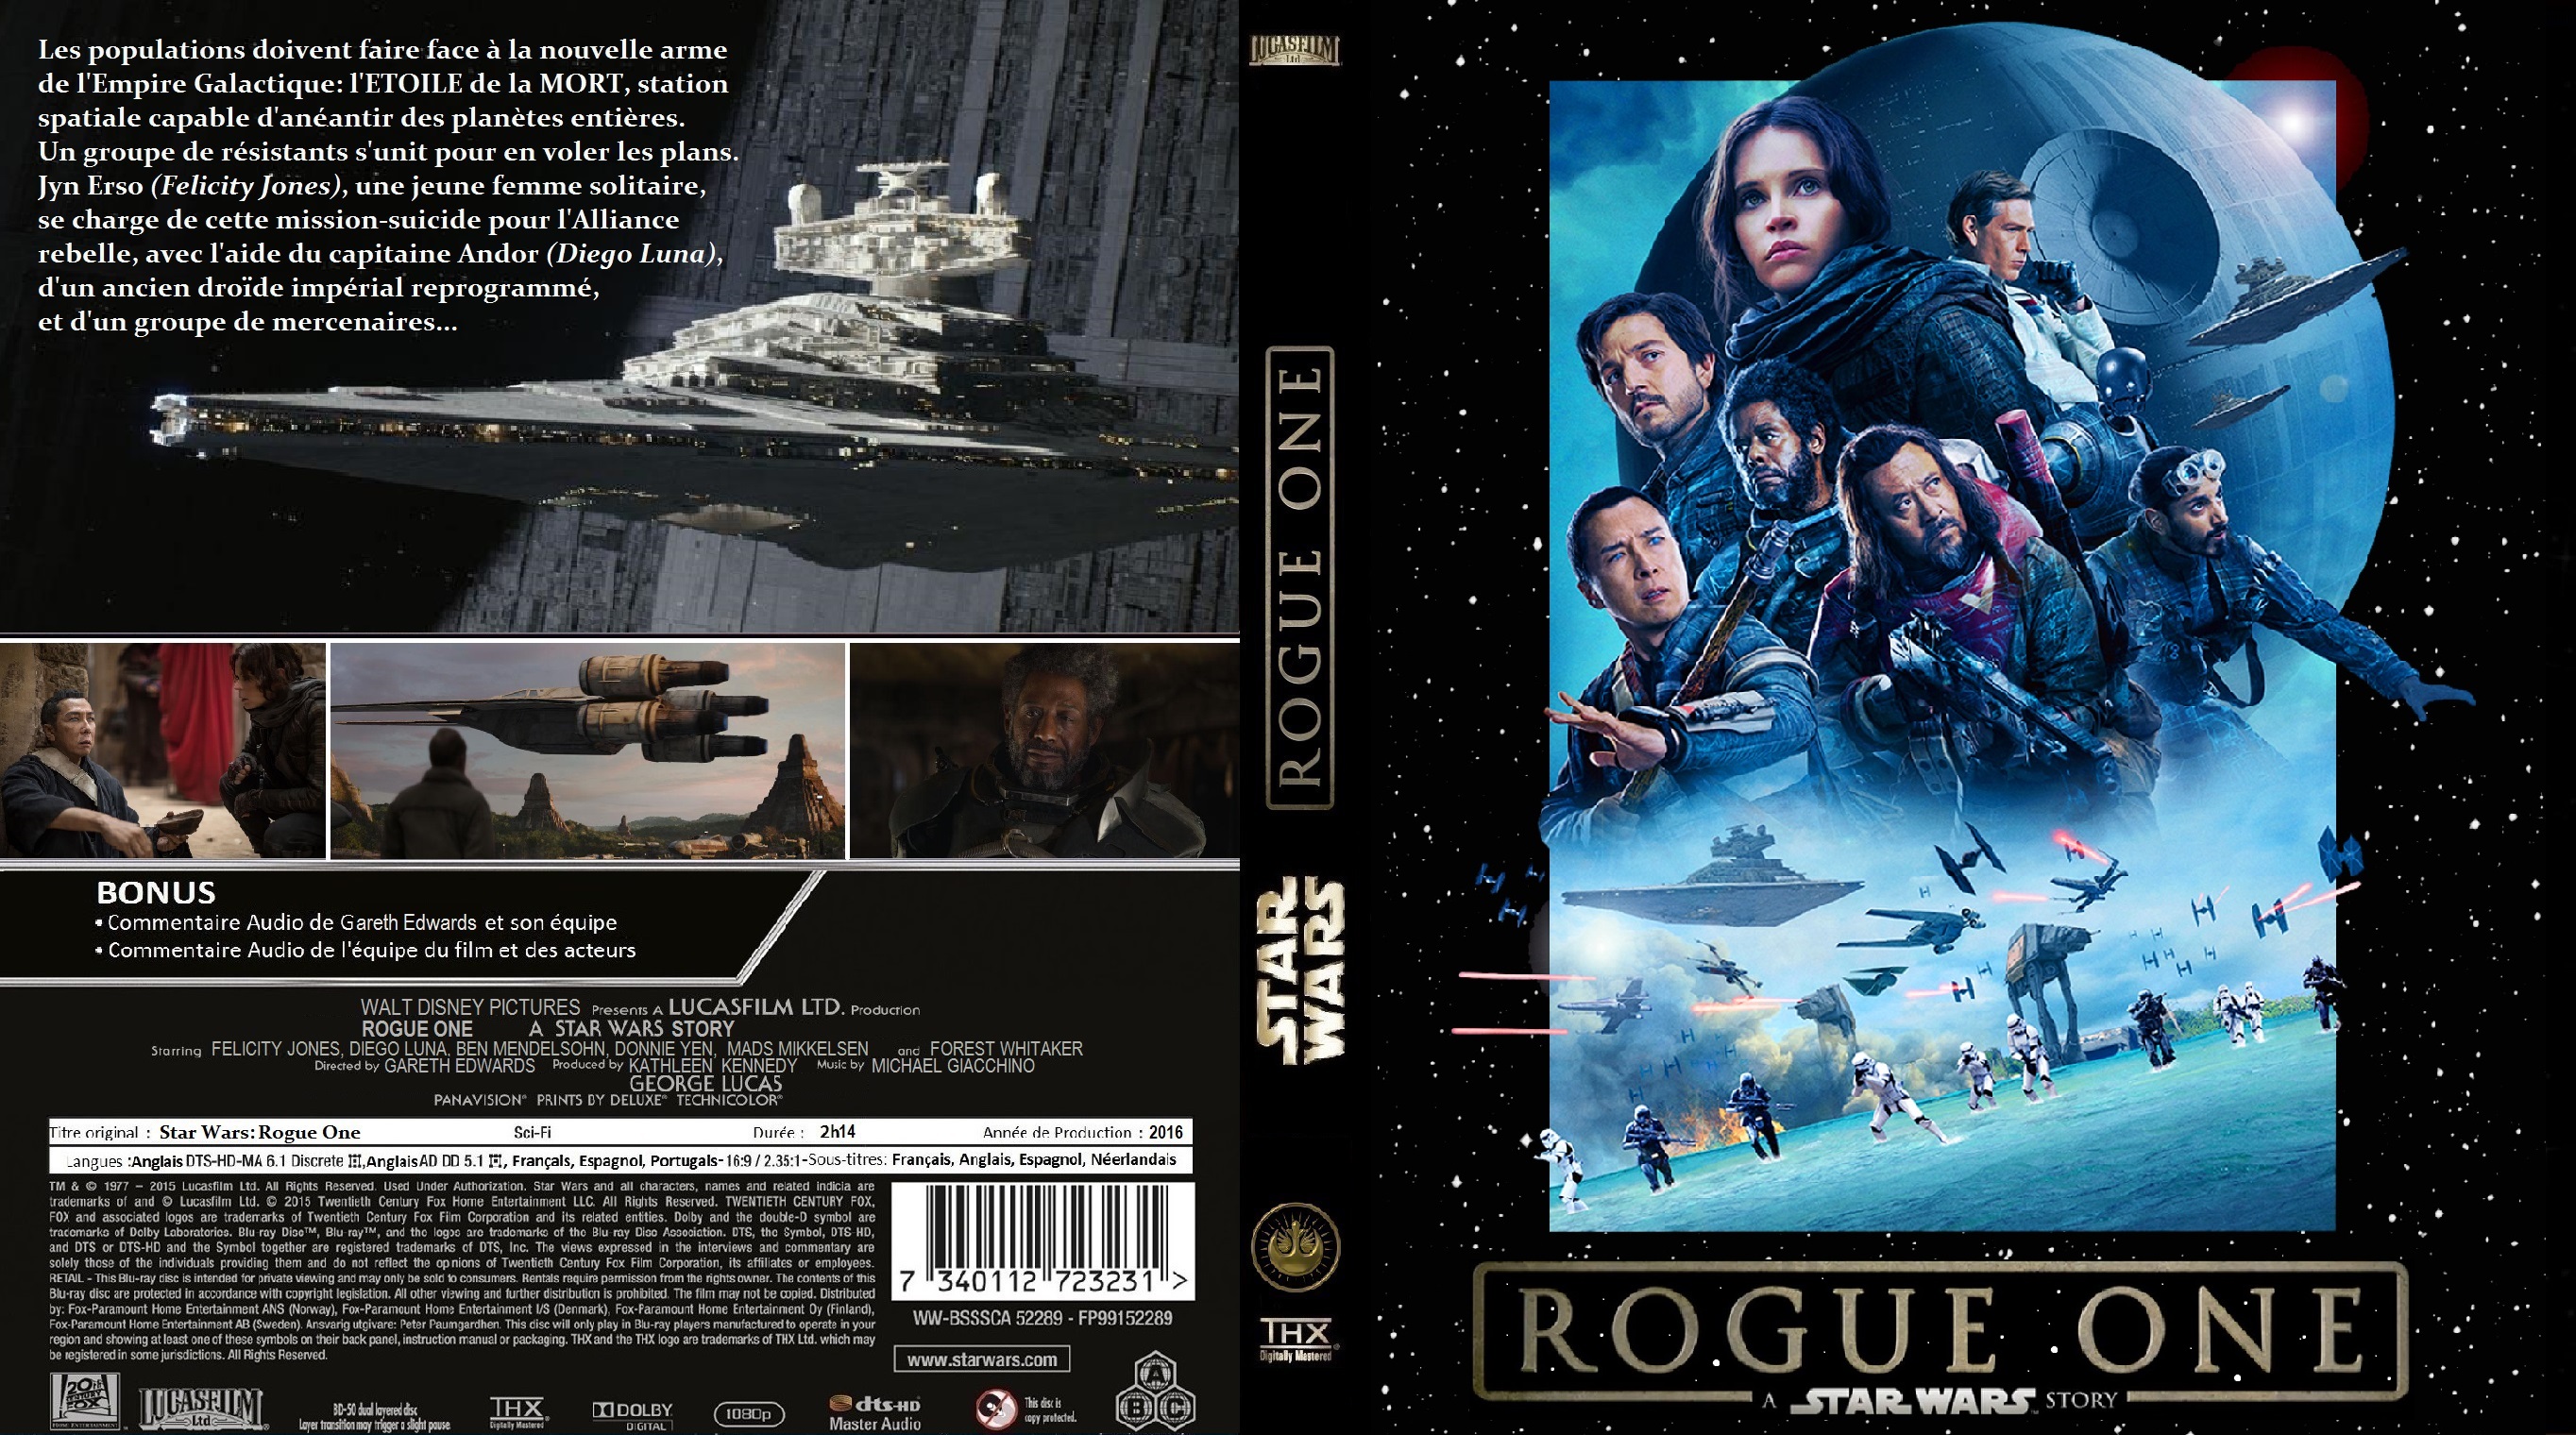 Jaquette DVD Rogue One: A Star Wars Story custom (BLU-RAY) v2